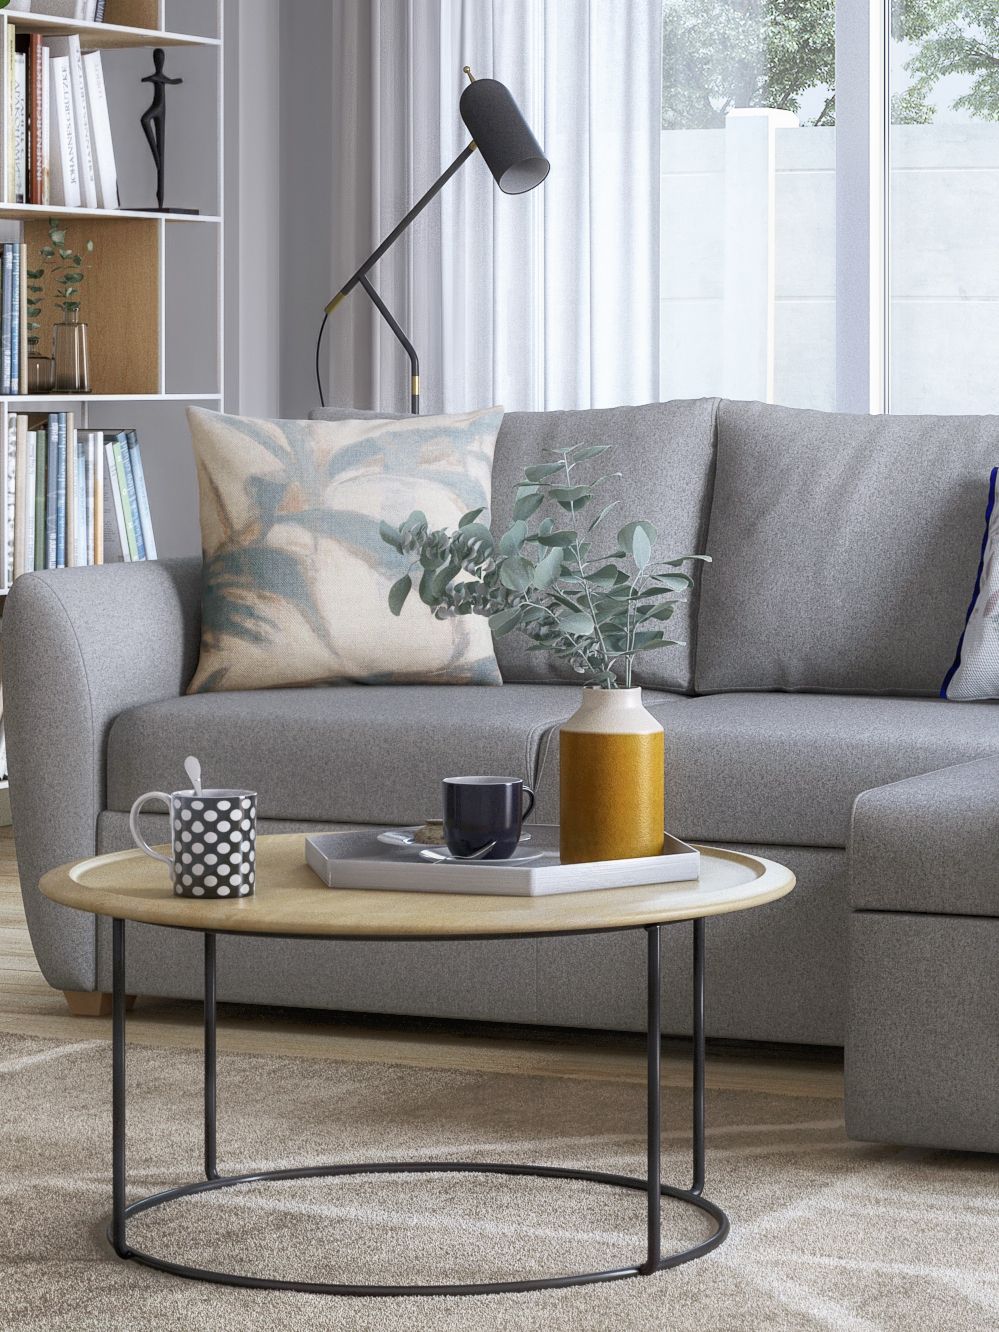 25 Best Living Room Ideas - Stylish Living Room Decorating: John Lewis